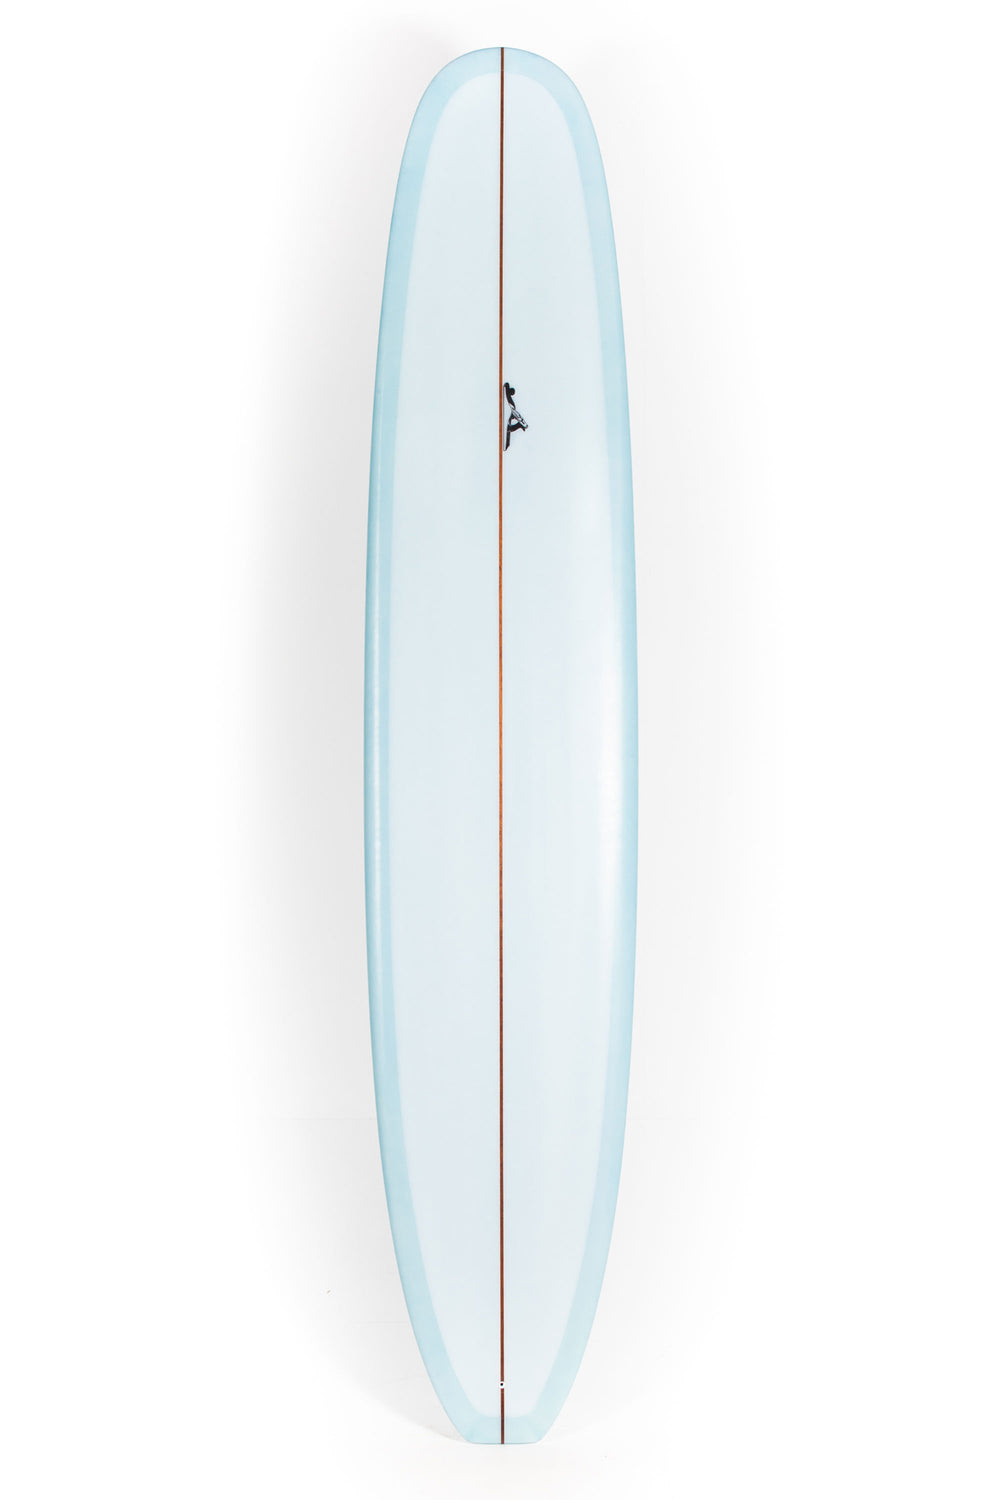 Pukas Surf Shop - Thomas Surfboards - STEP DECK - 9'6